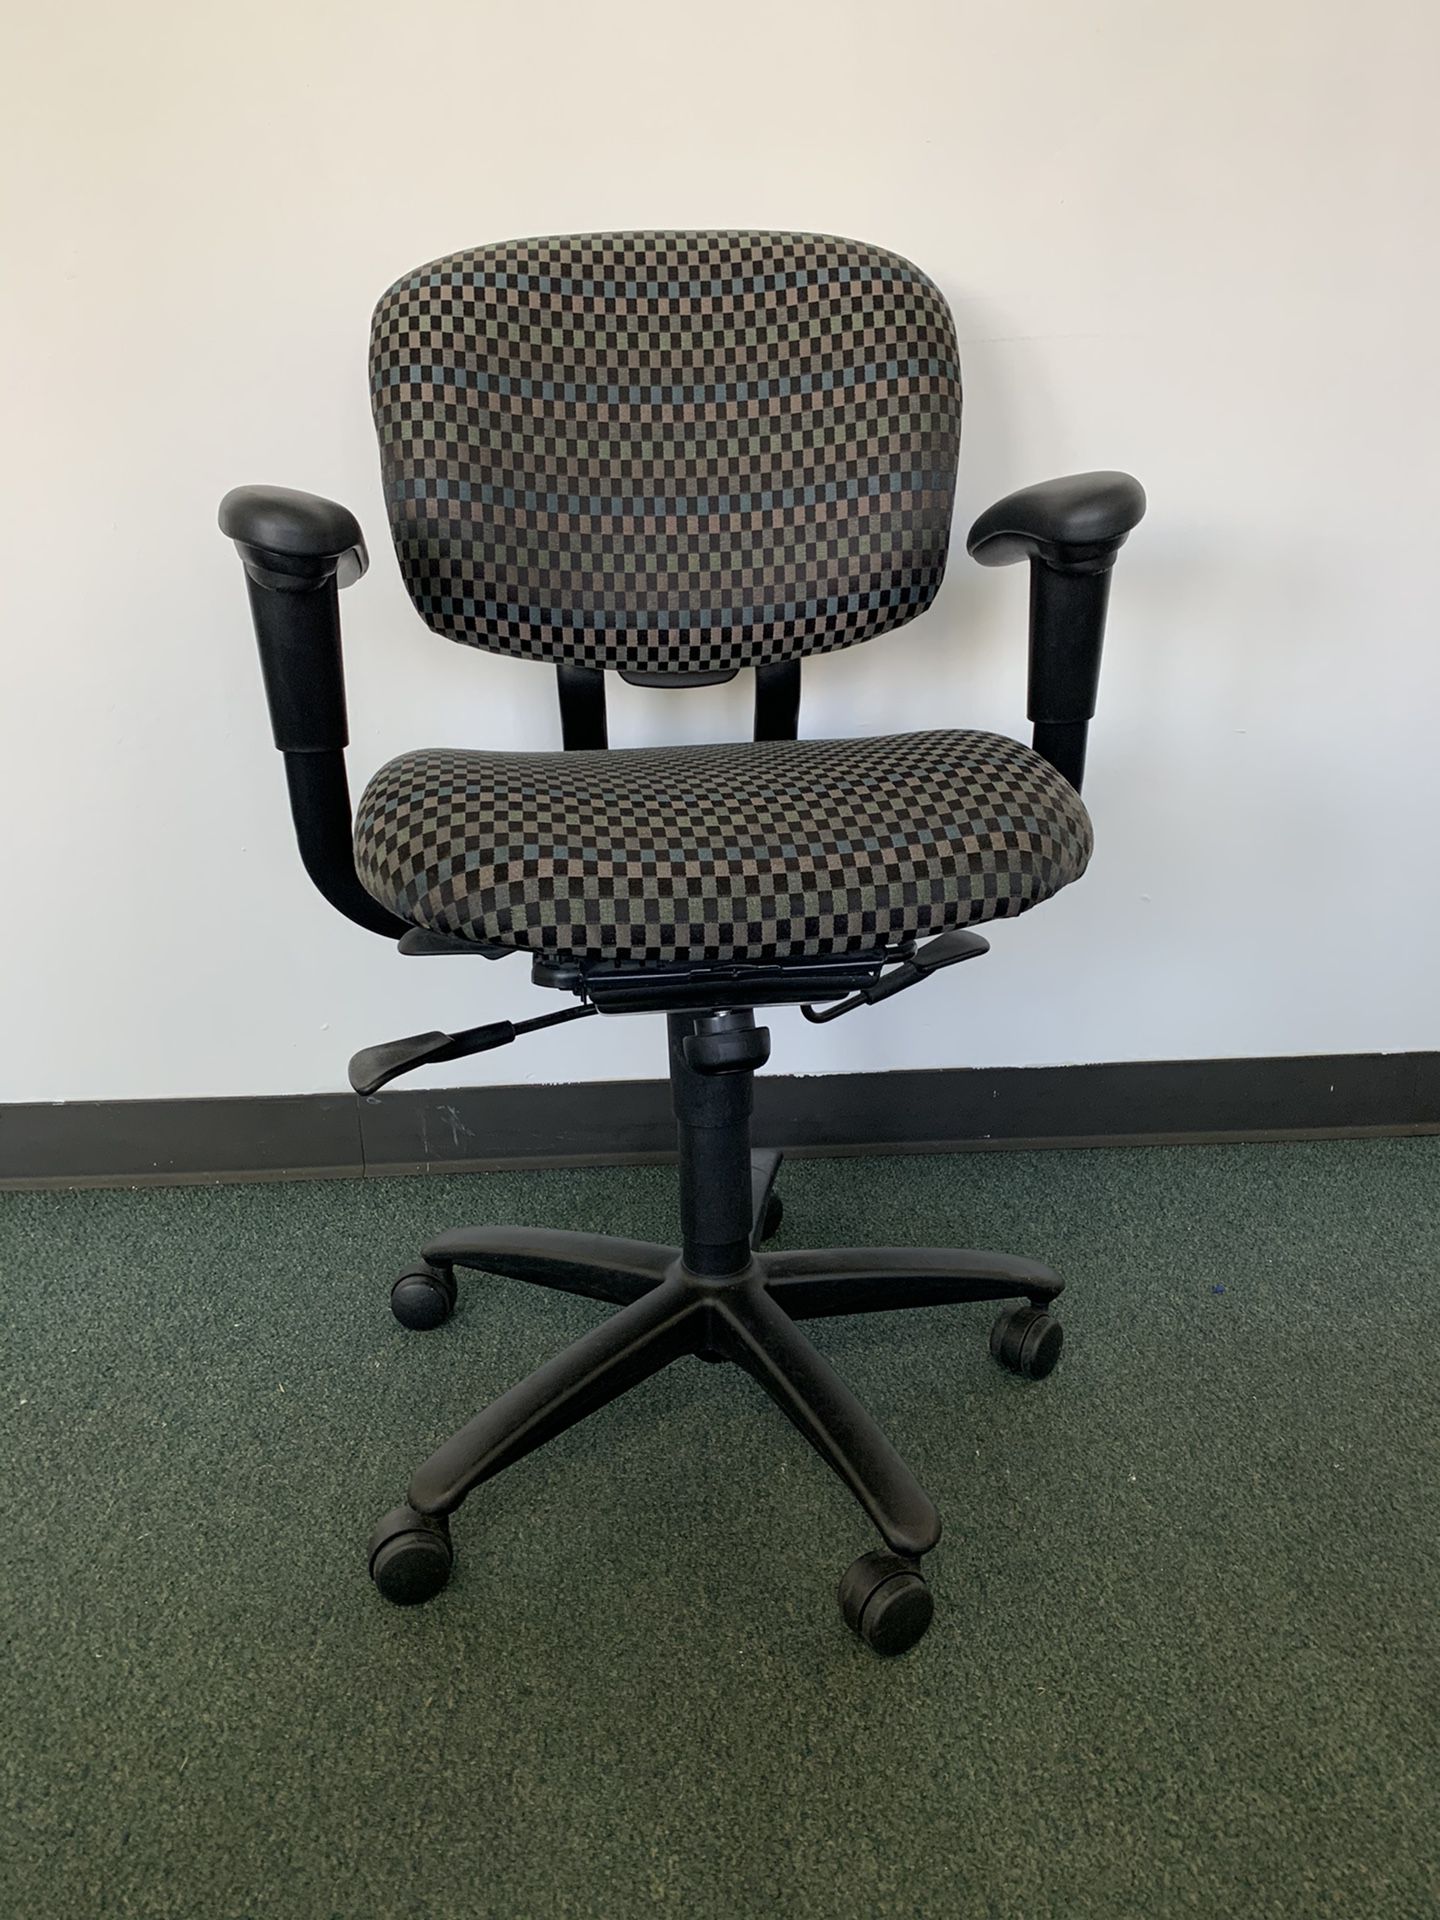 Chair - Haworth Improv HE task chair